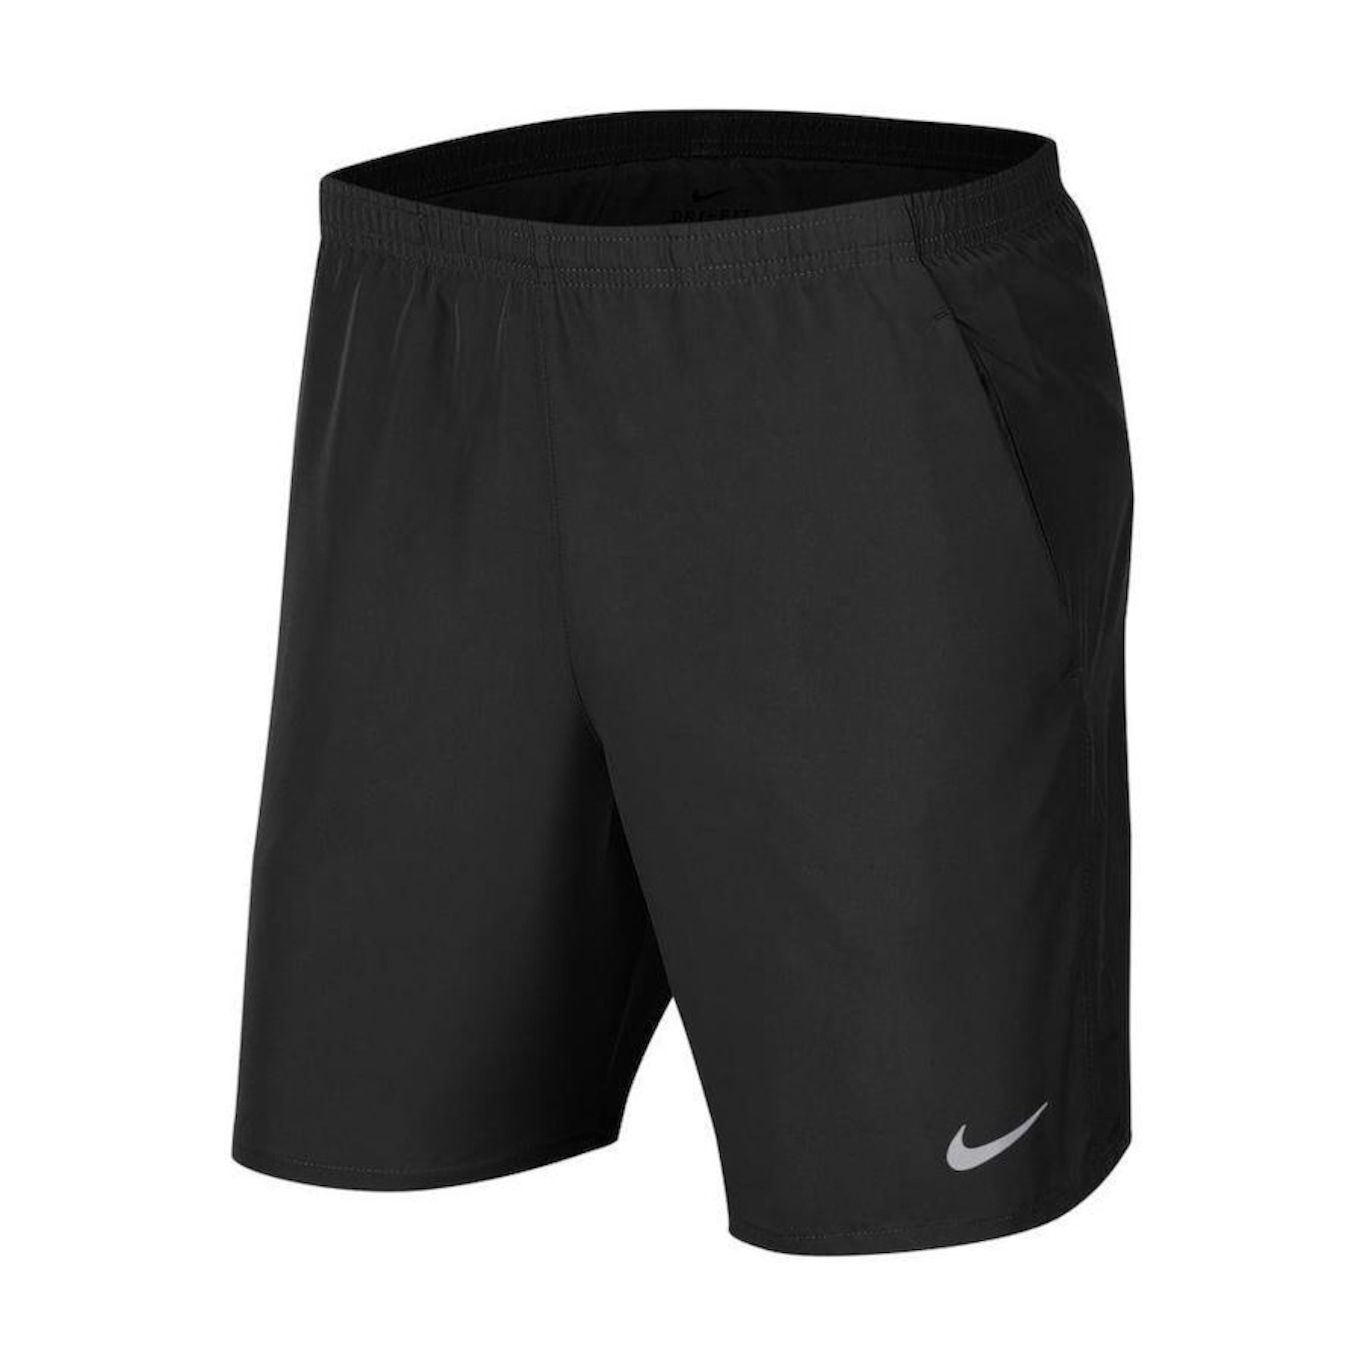 Shorts Nike Dri-FIT Run - Masculino em Promoção